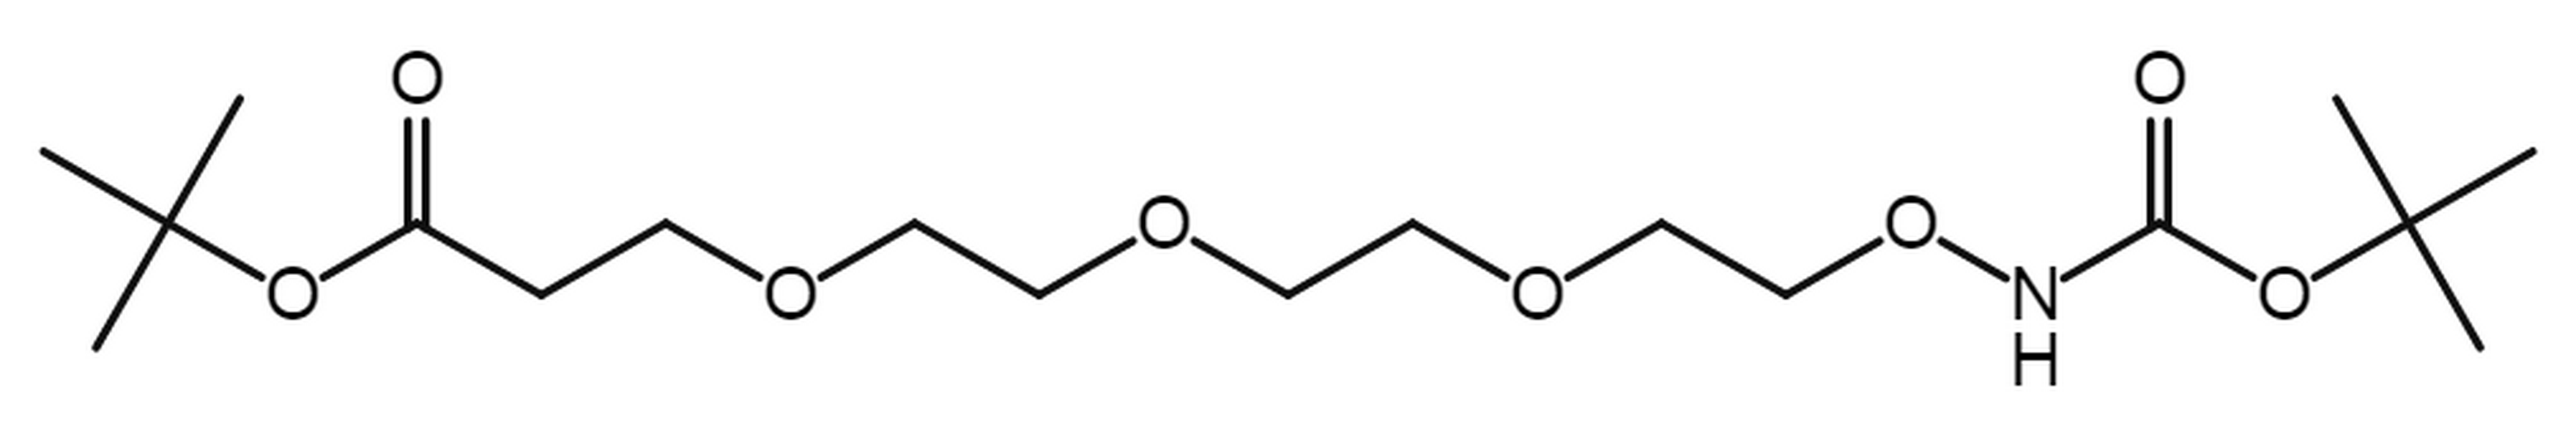 t-Boc-Aminooxy-PEG3-t-butyl ester